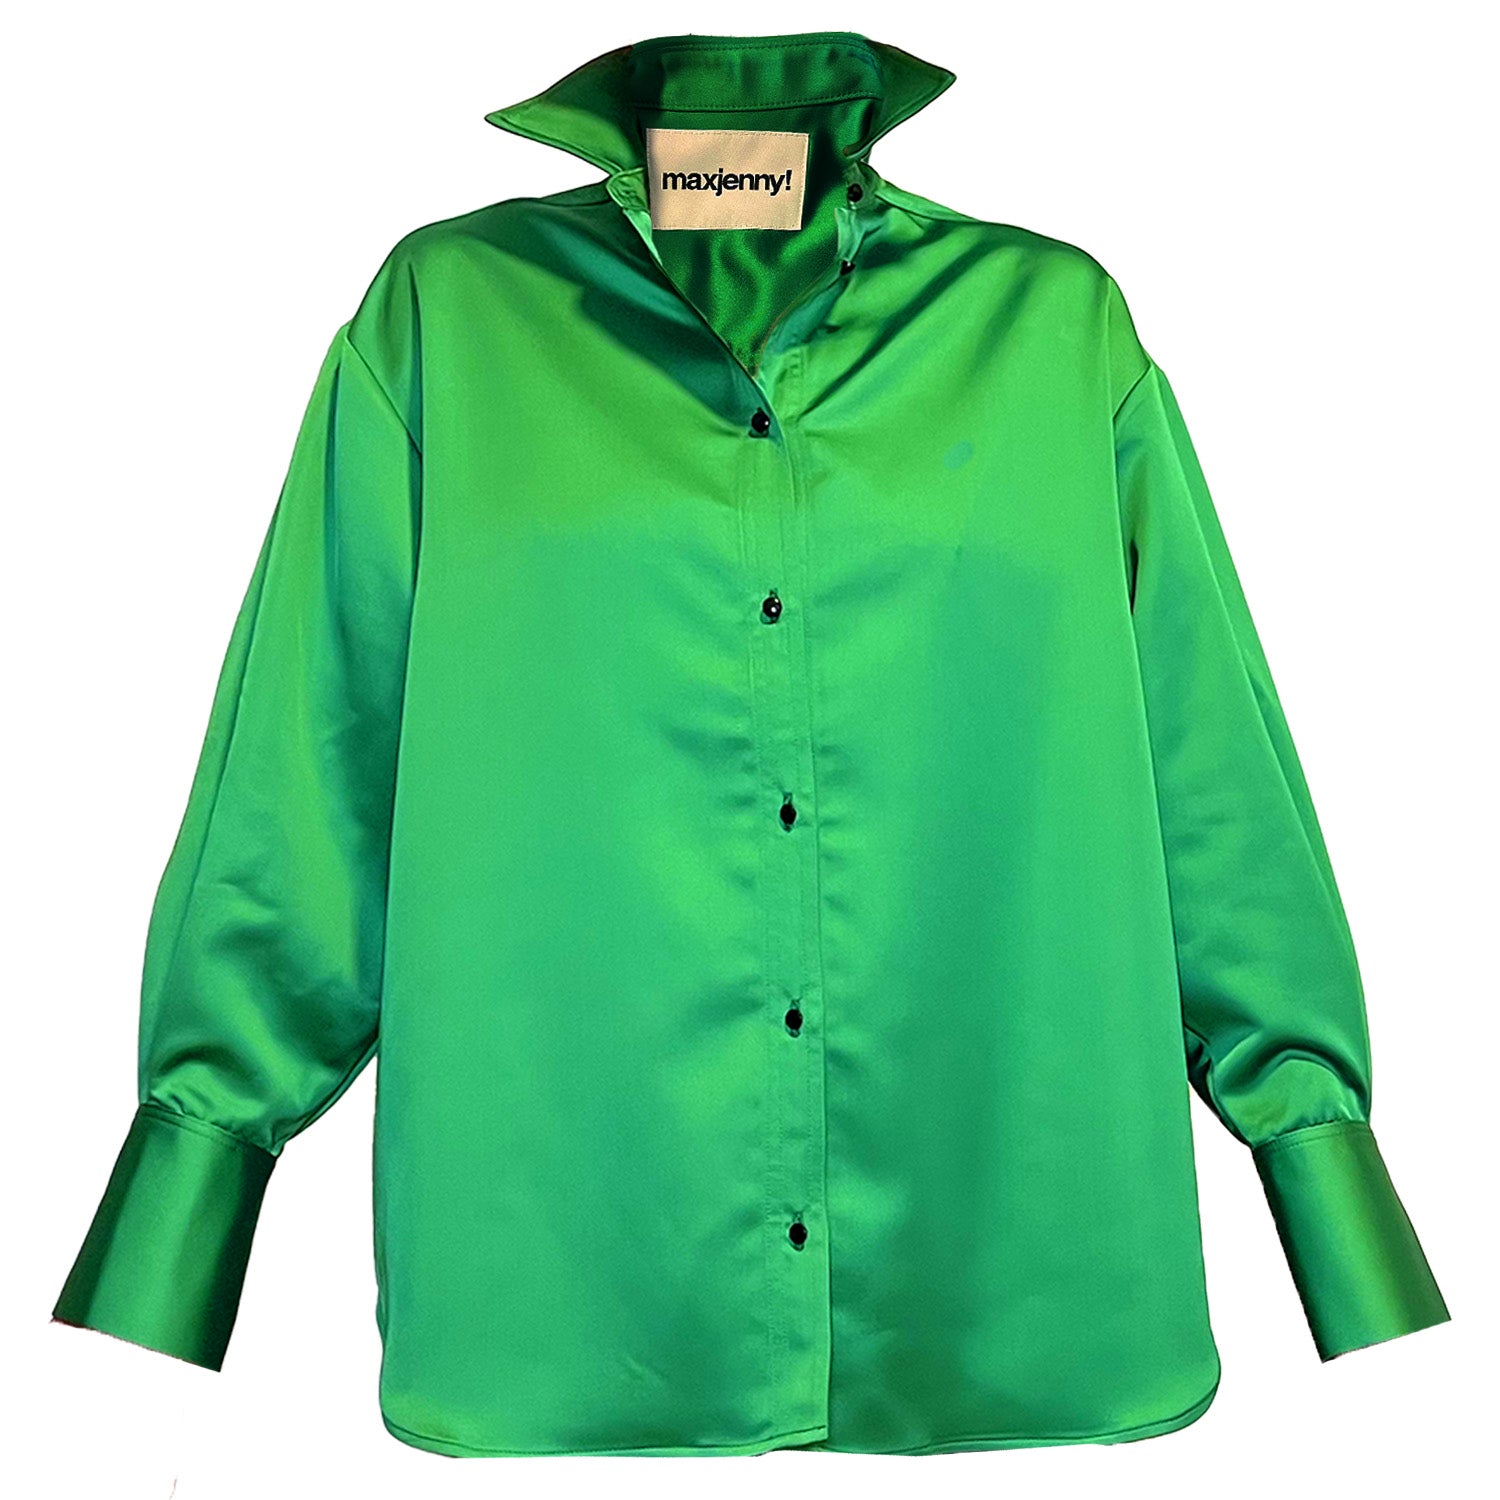 Rothko Collection Green Shirt